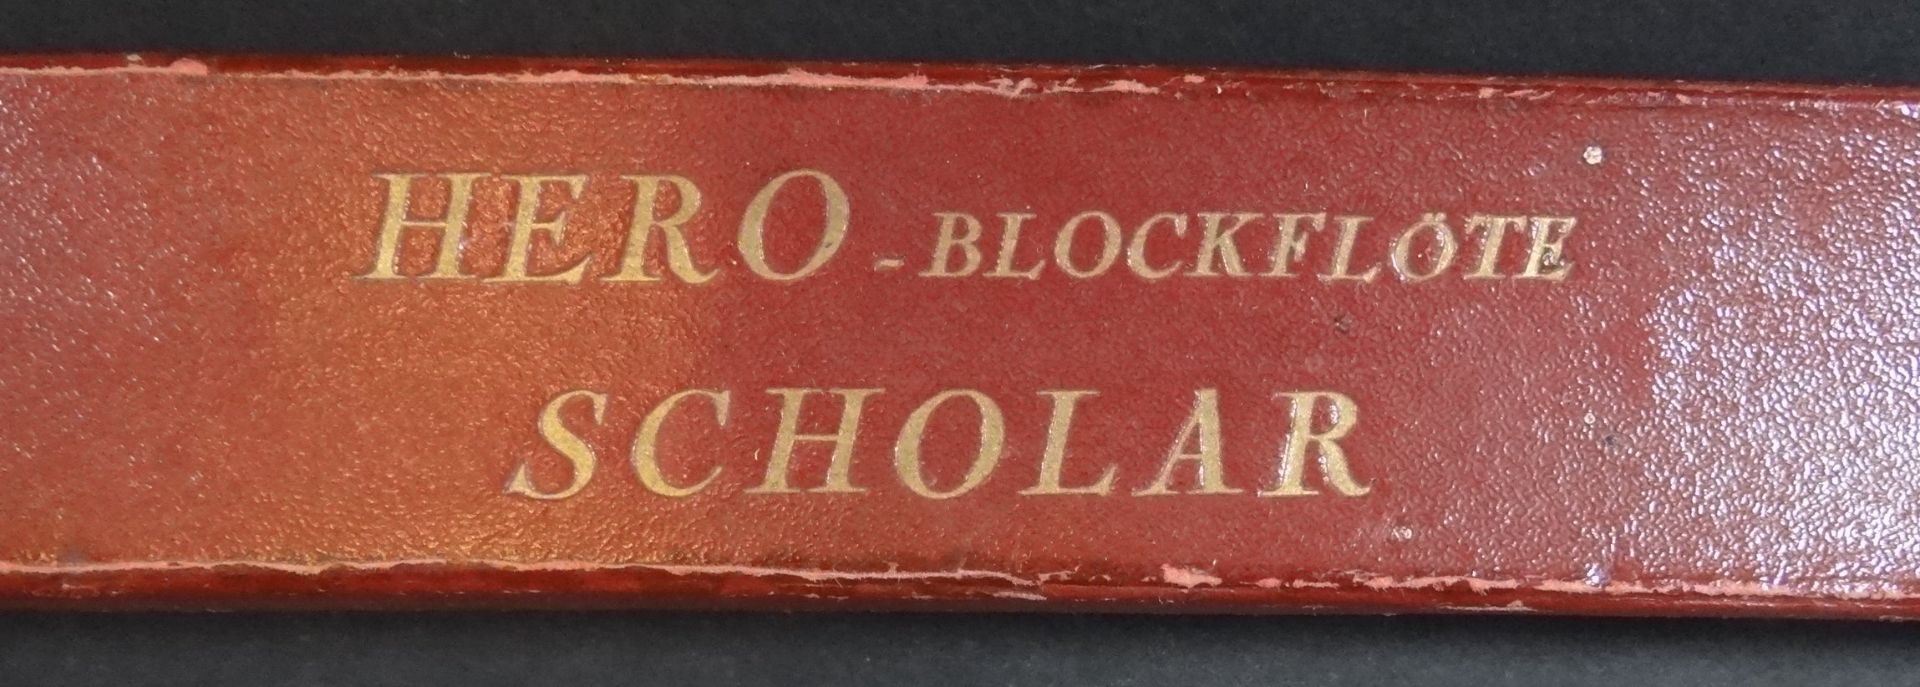 Hero-Blöckflöte "Scholar" in orig. Karton, L-32 cm - Image 2 of 3